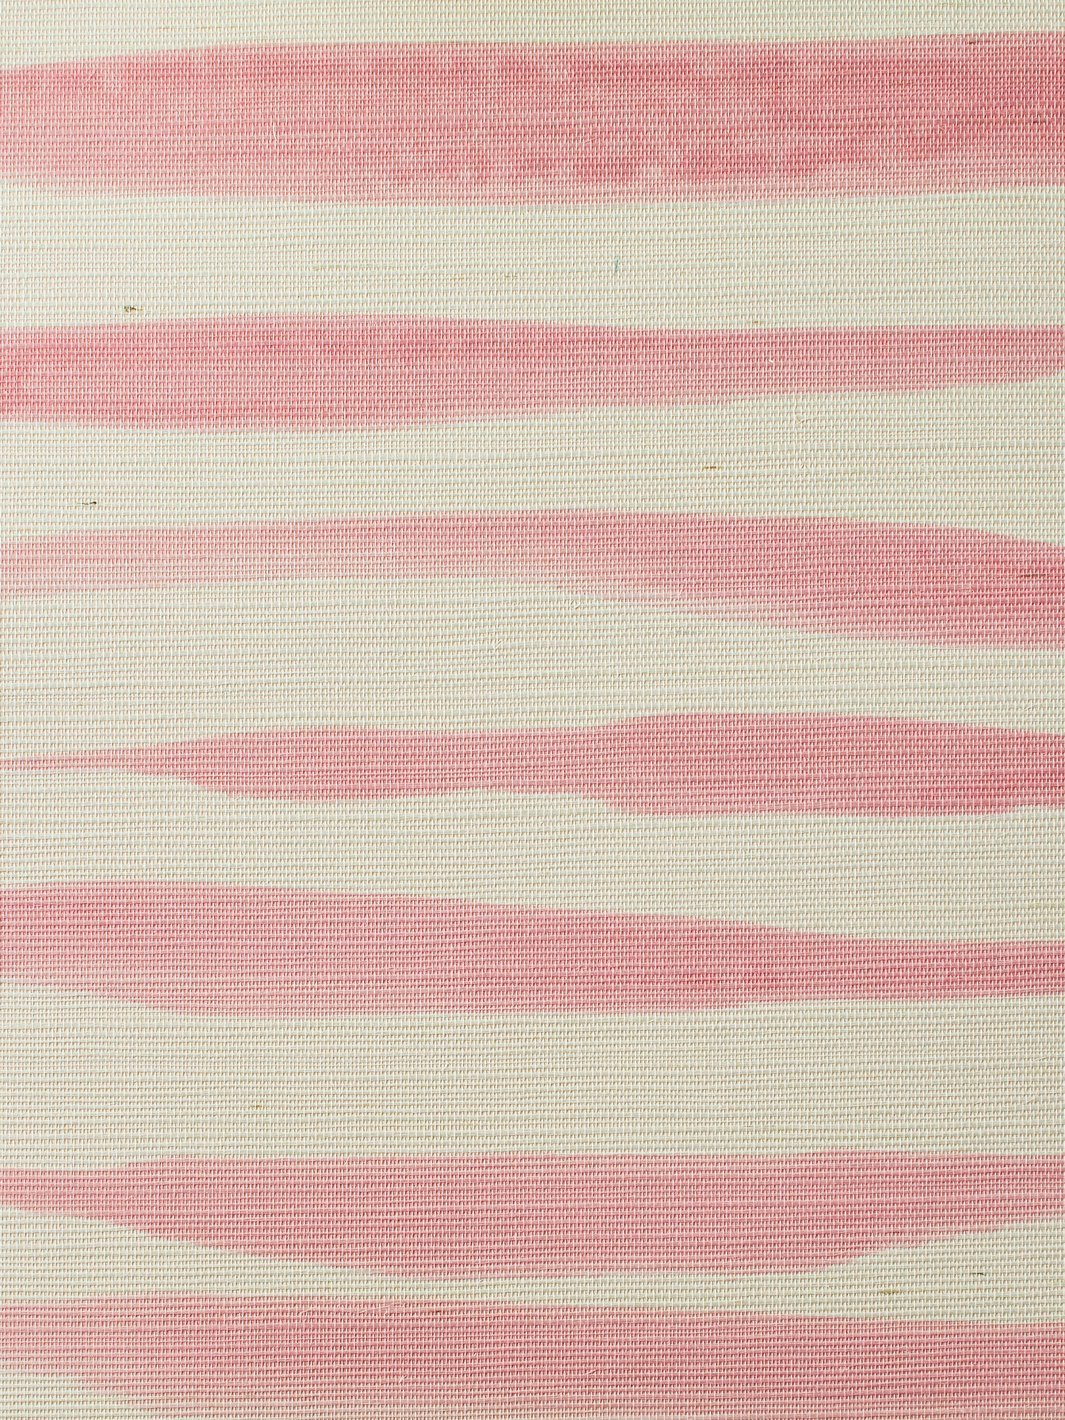 'Watercolor Weave Large' Grasscloth' Wallpaper by Wallshoppe - Pink